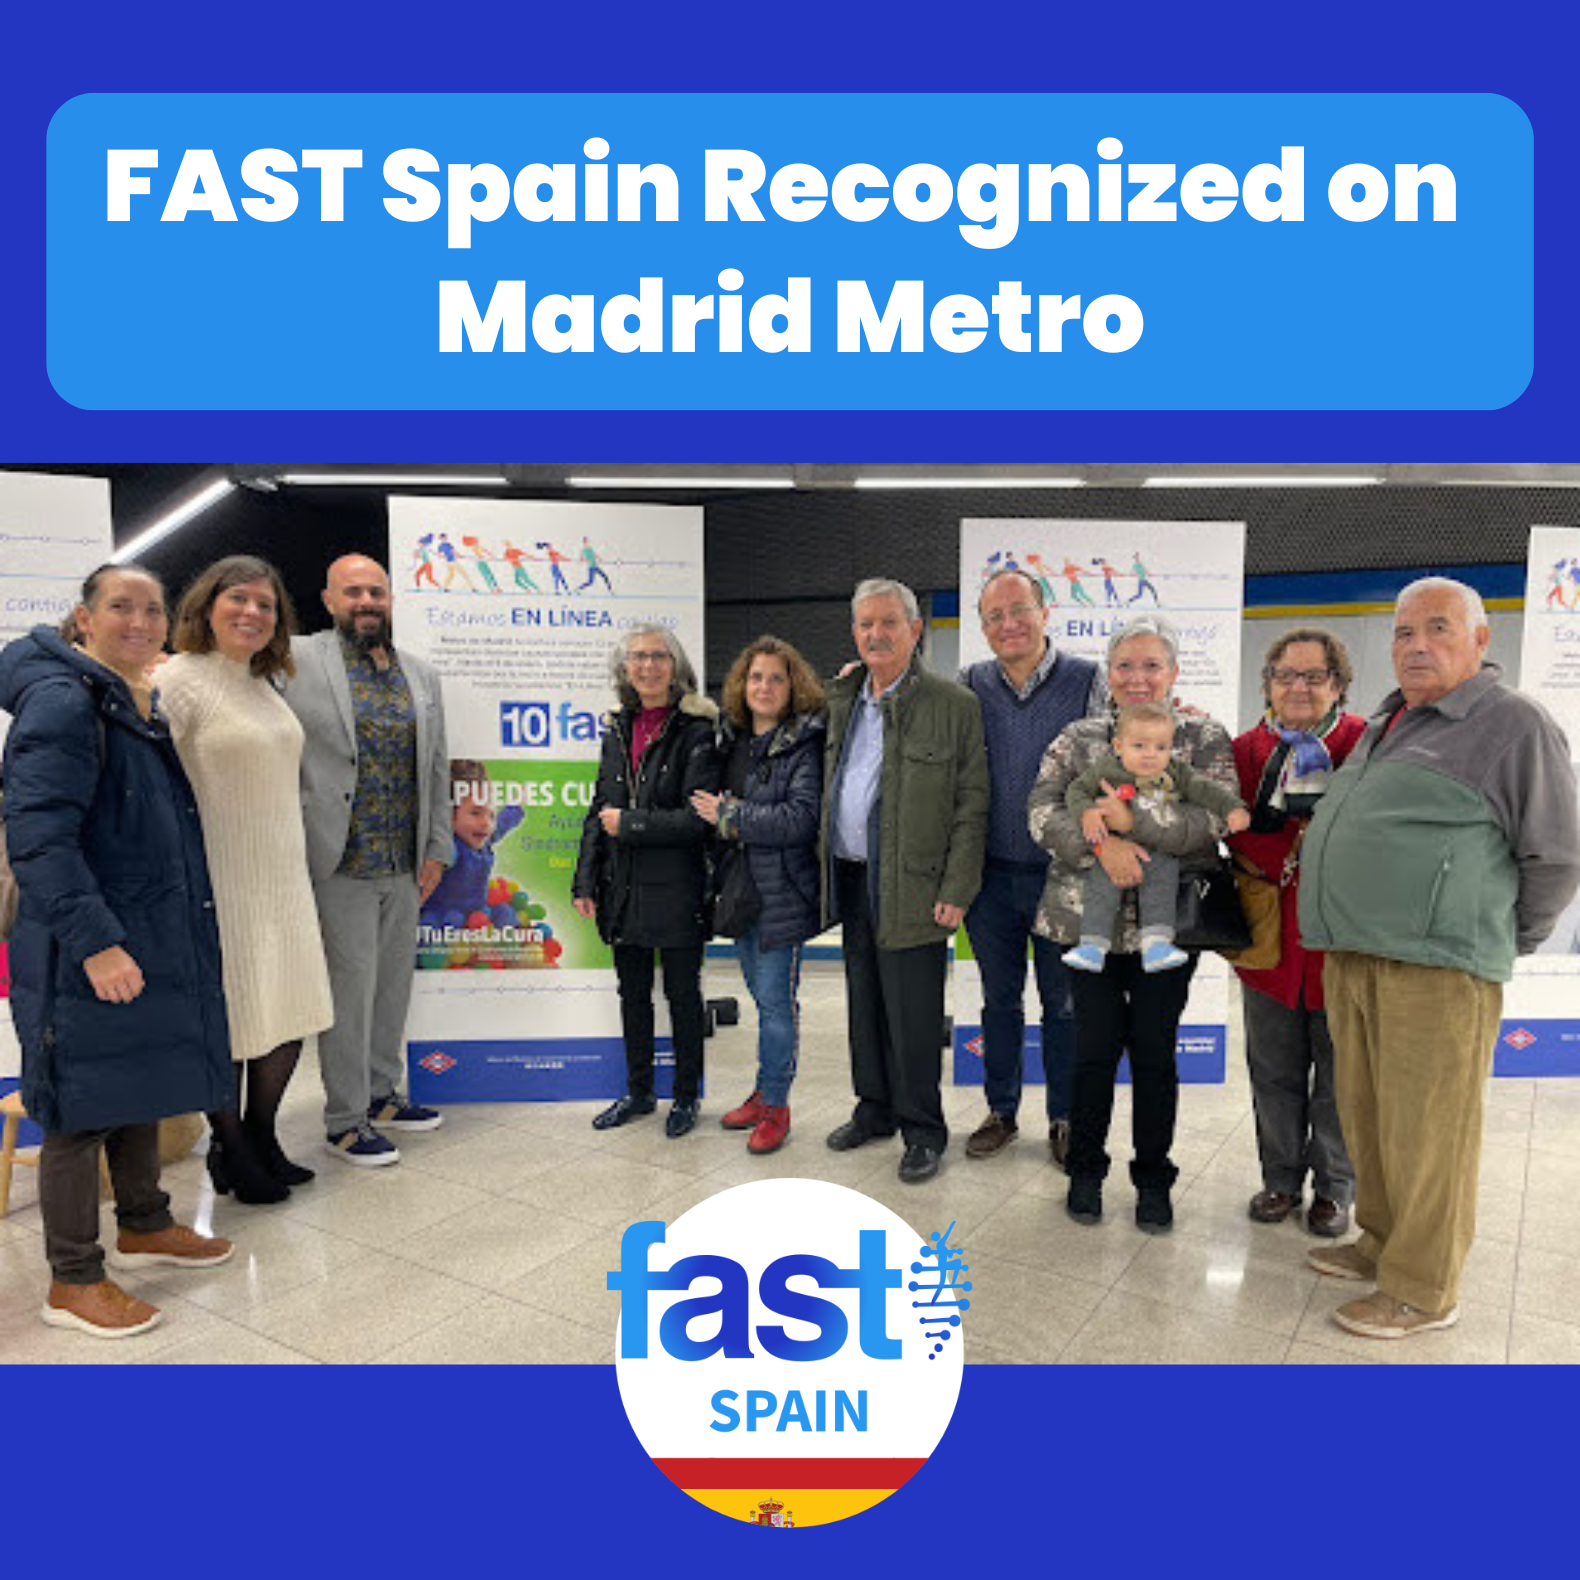 FAST Spain recognized on Madrid Metro